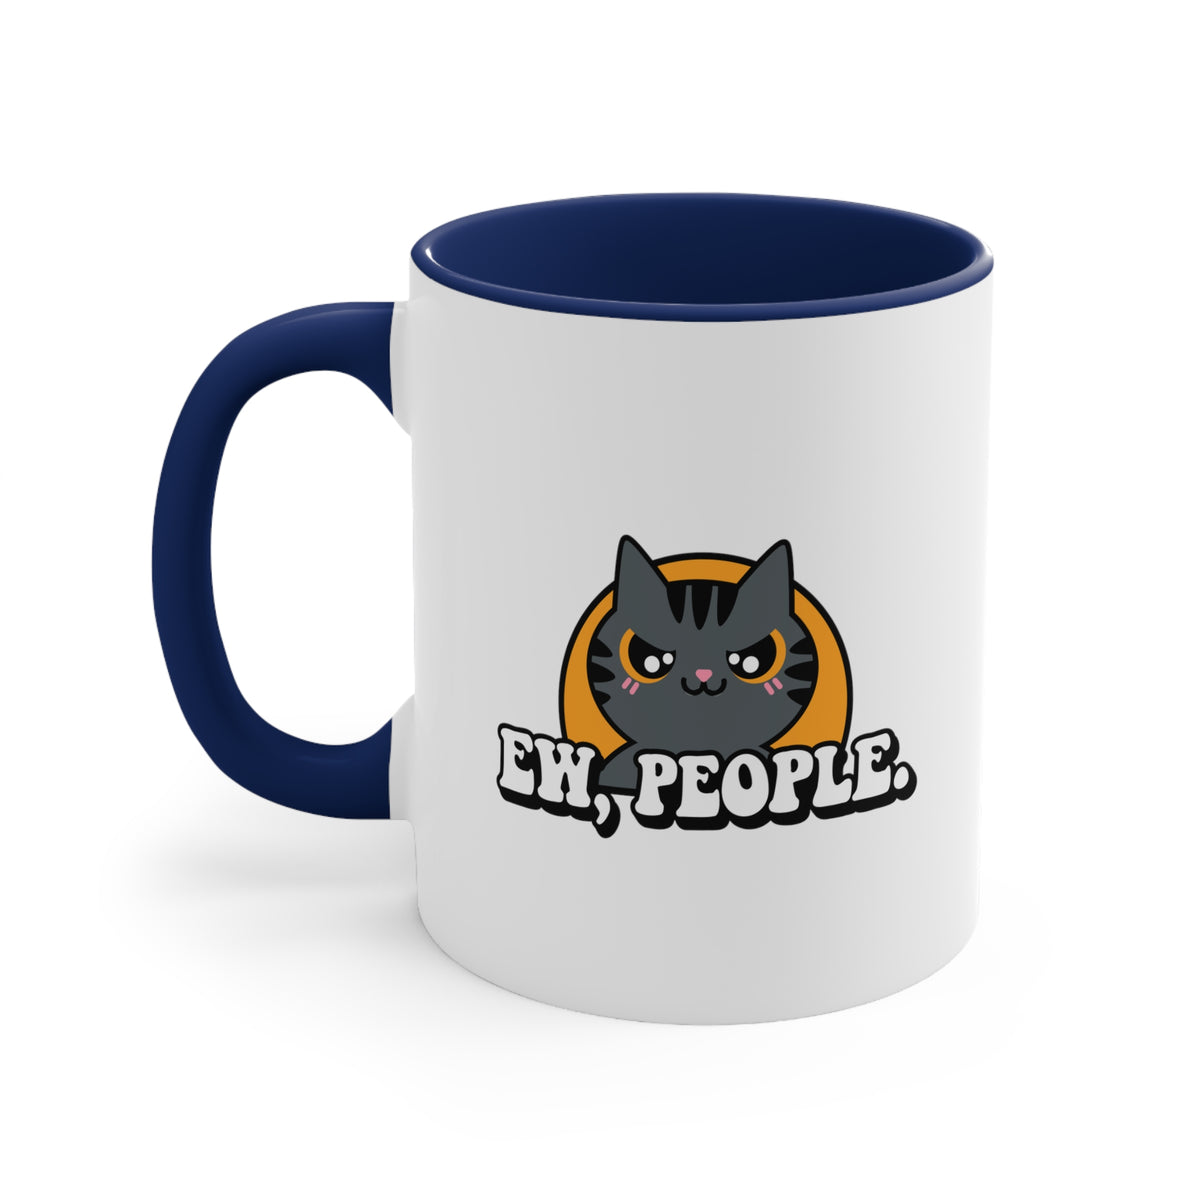 Ew People Accent Coffee Mug, 11oz